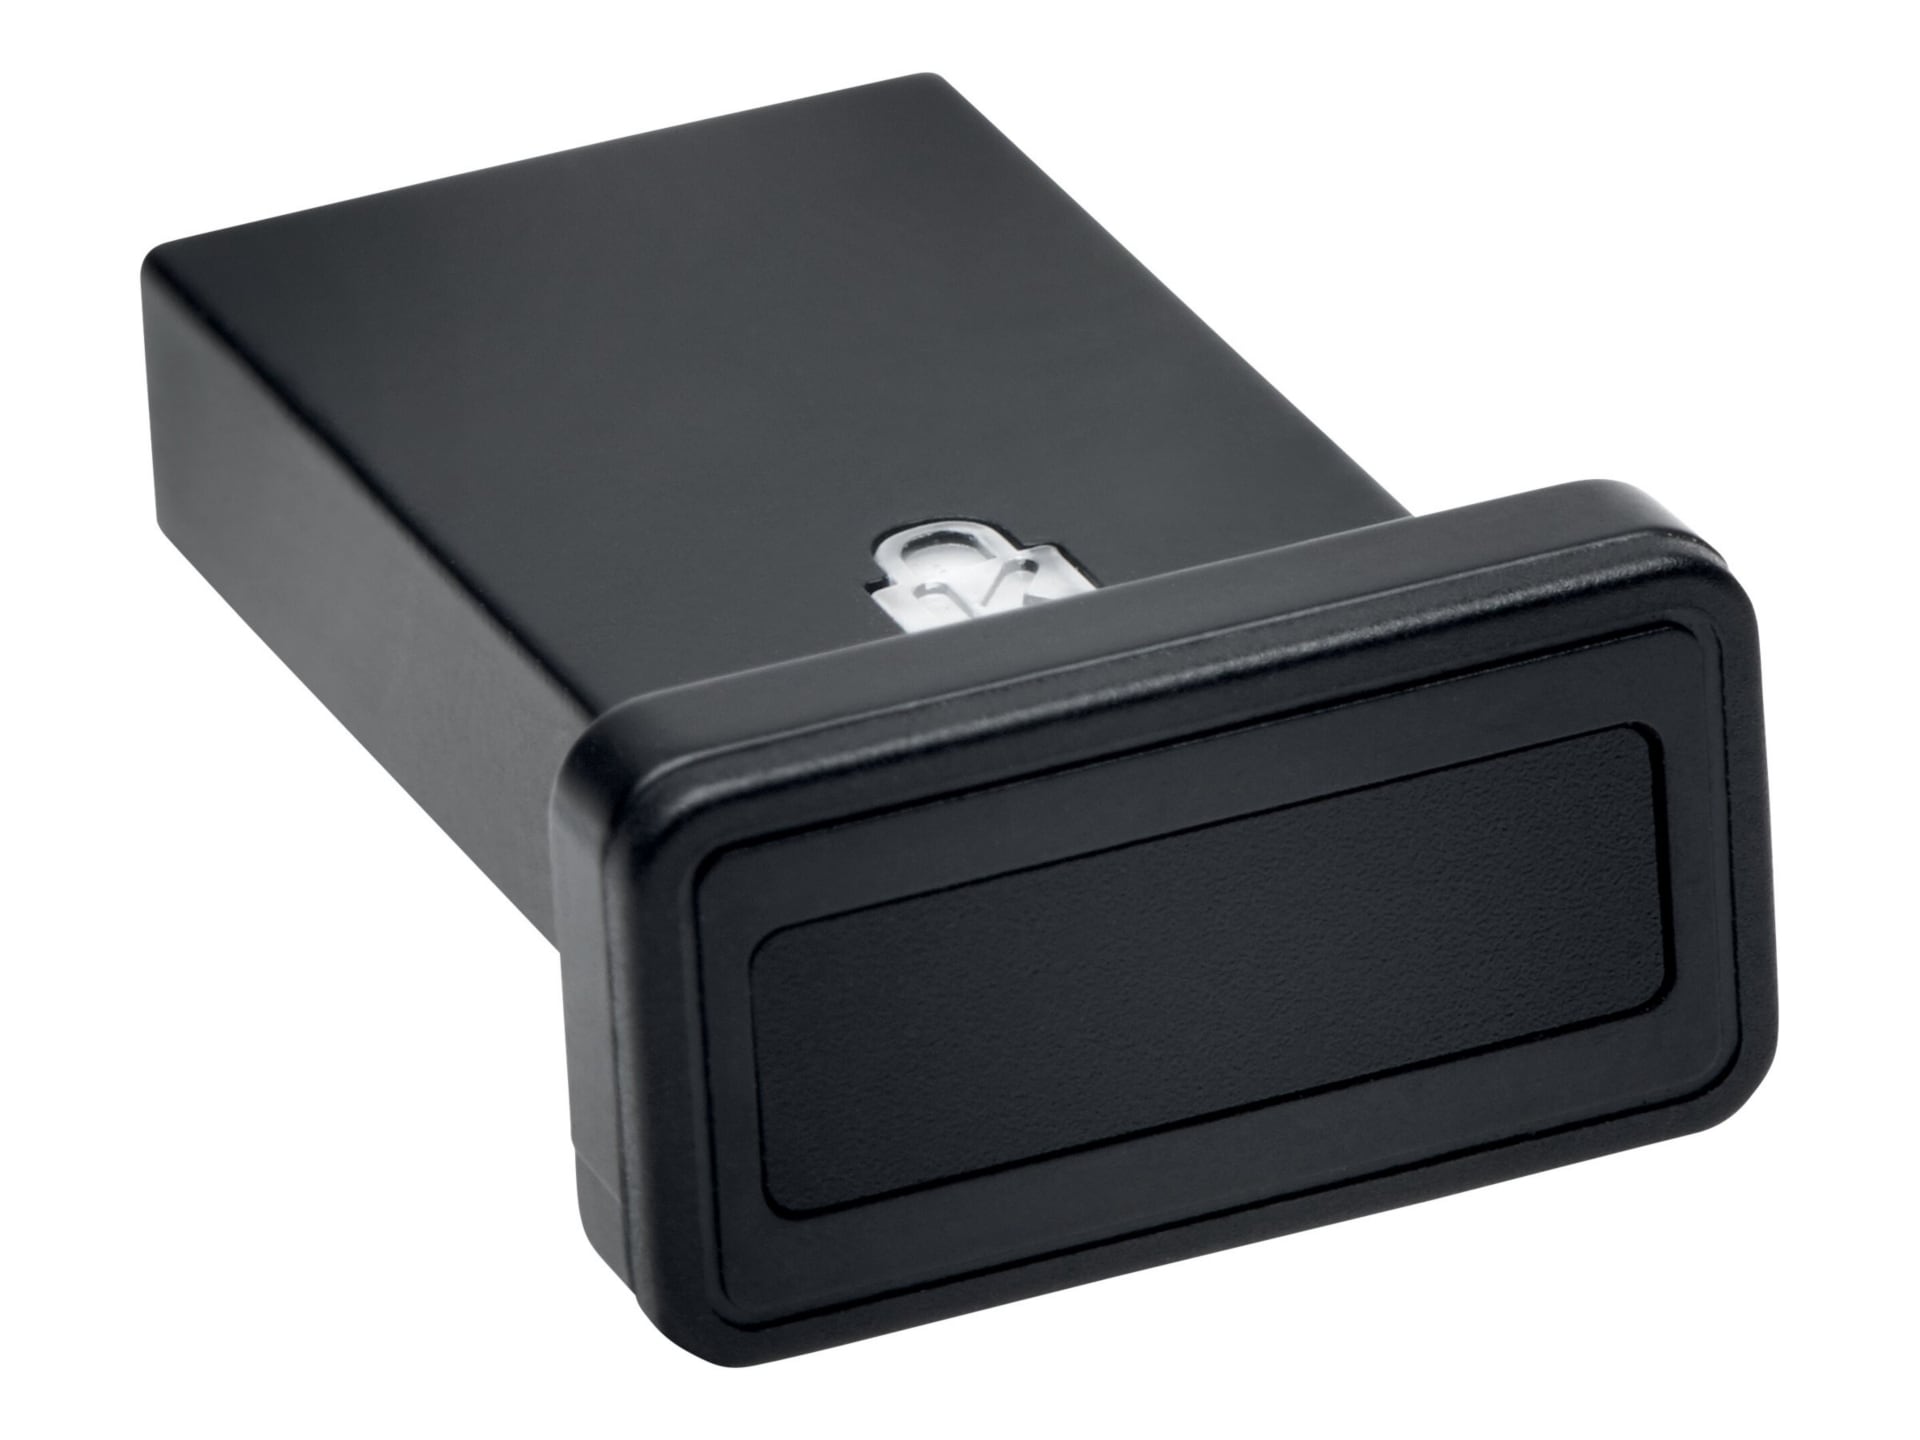 Kensington VeriMark Guard USB-A Fingerprint Key - FIDO2, WebAuthn/CTAP2, & FIDO U2F - Cross Platform fingerprint reader